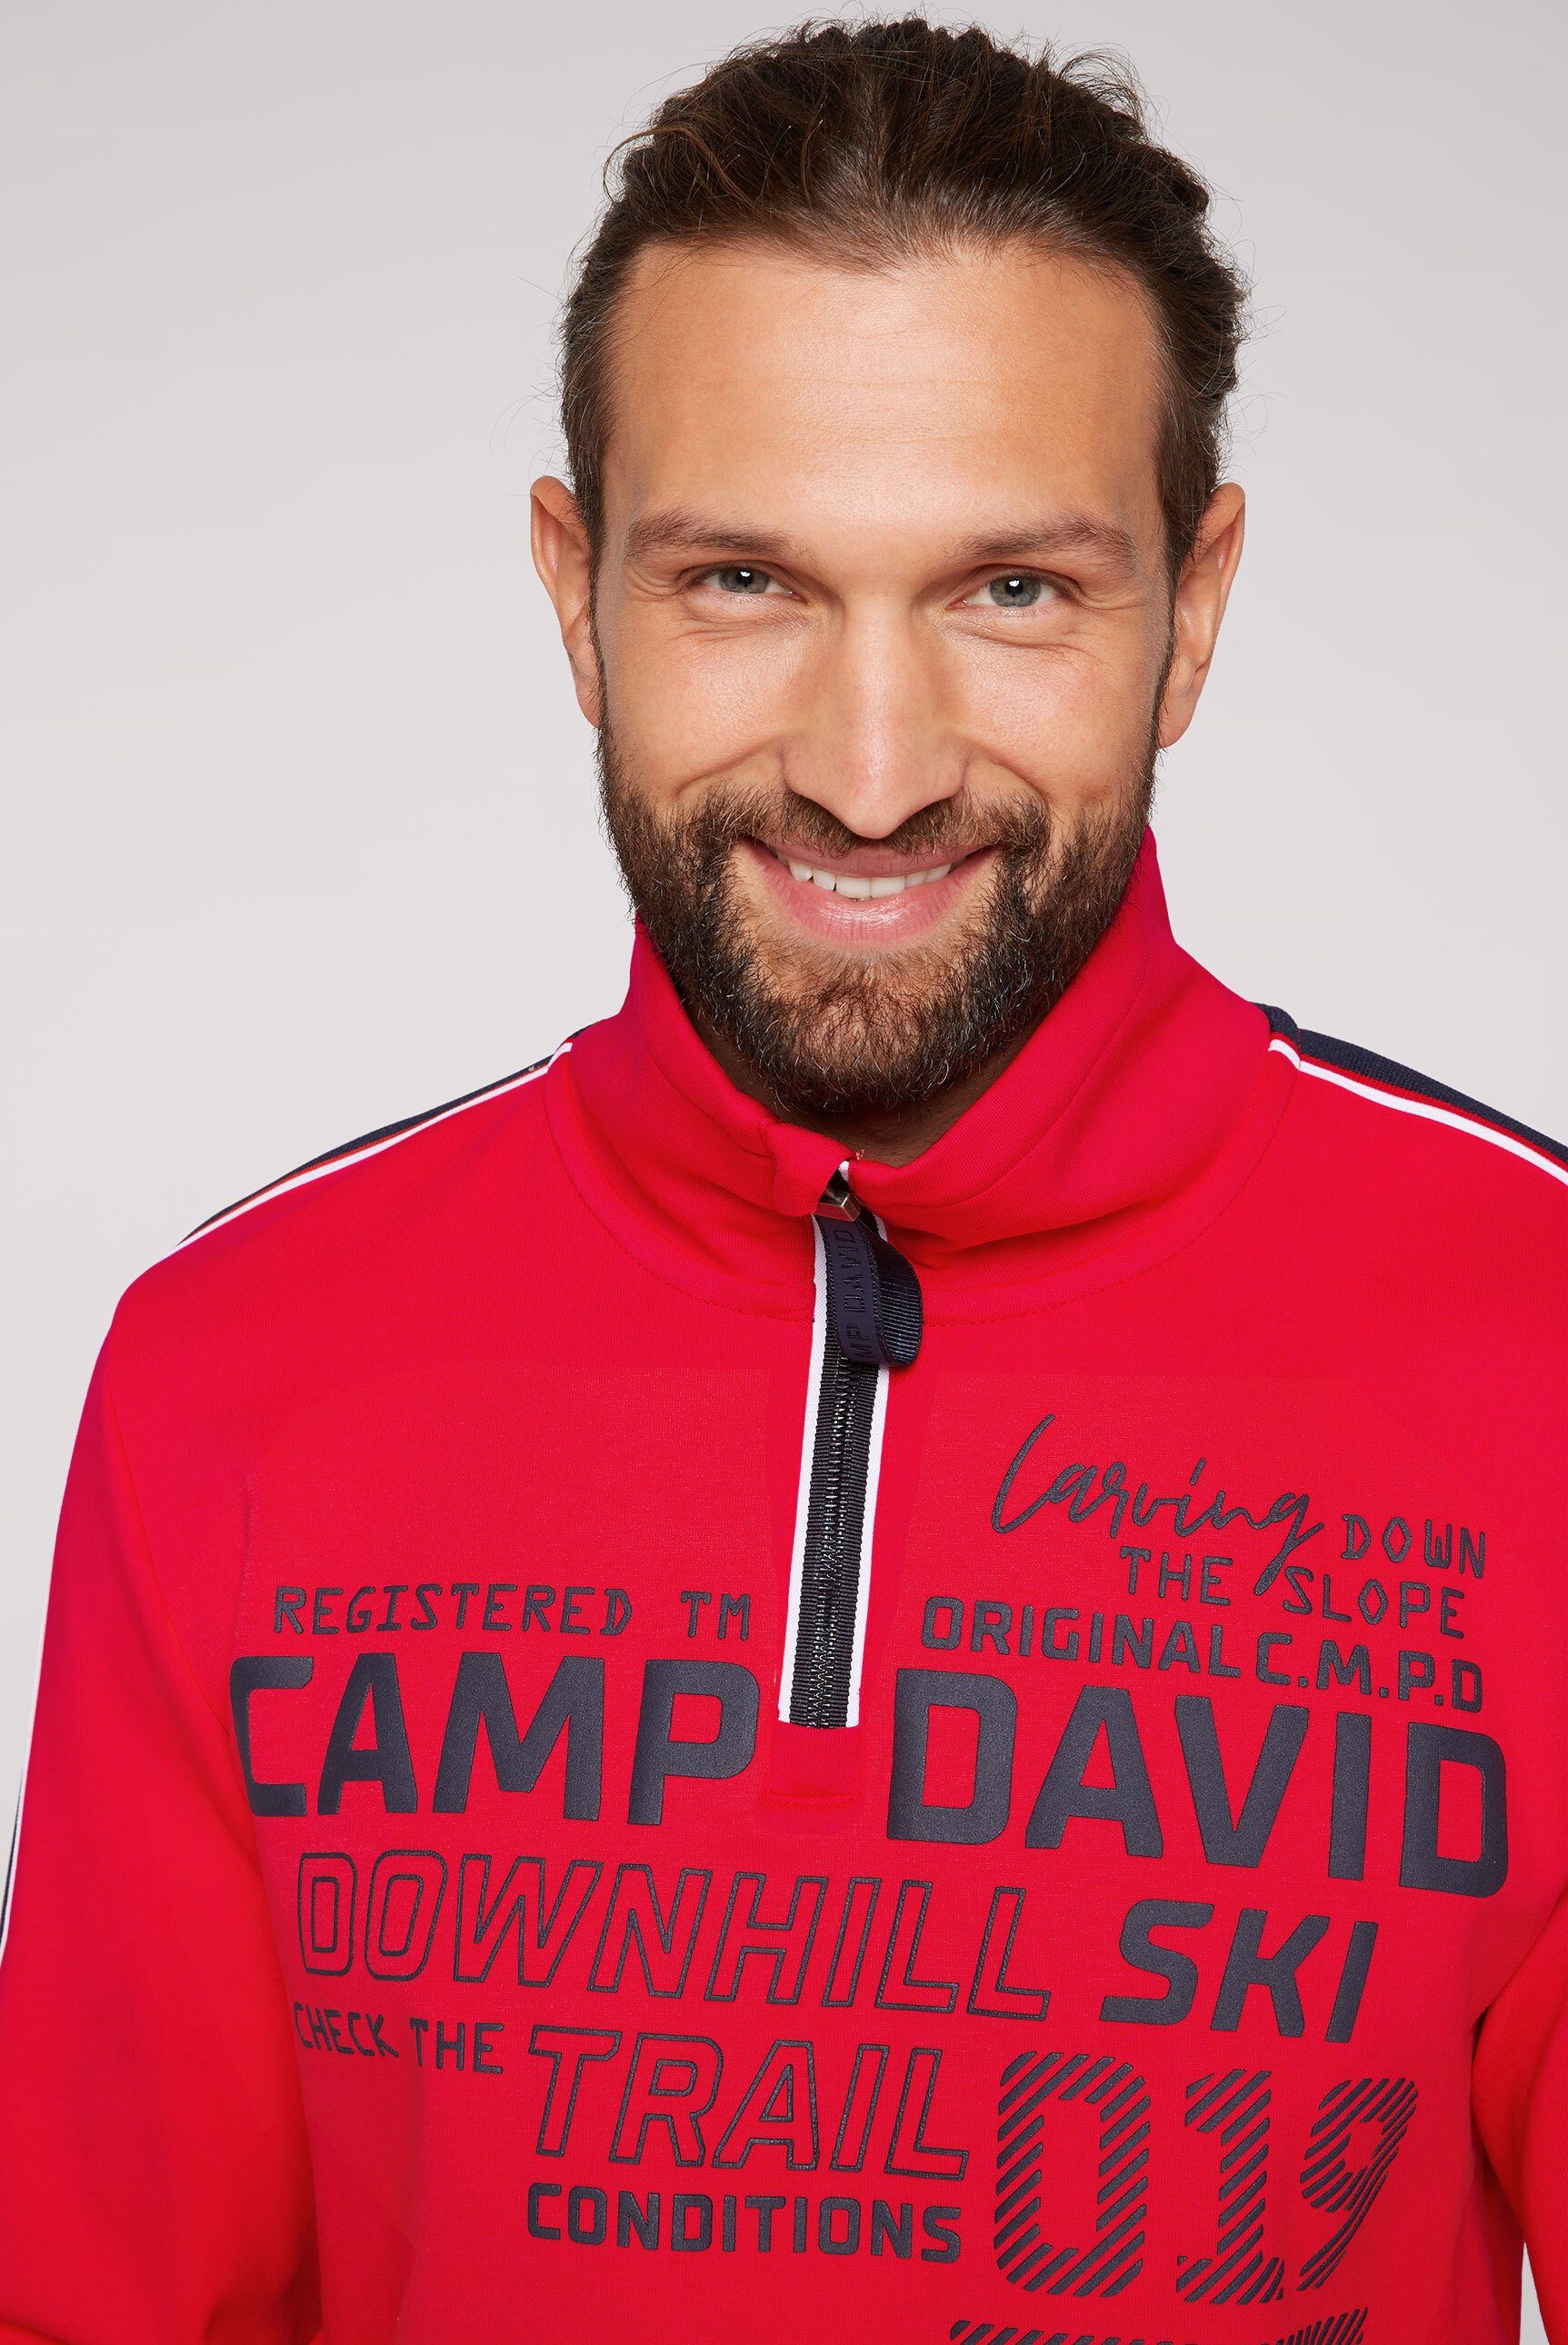 DAVID CAMP Sweater aus Bonded-Jersey